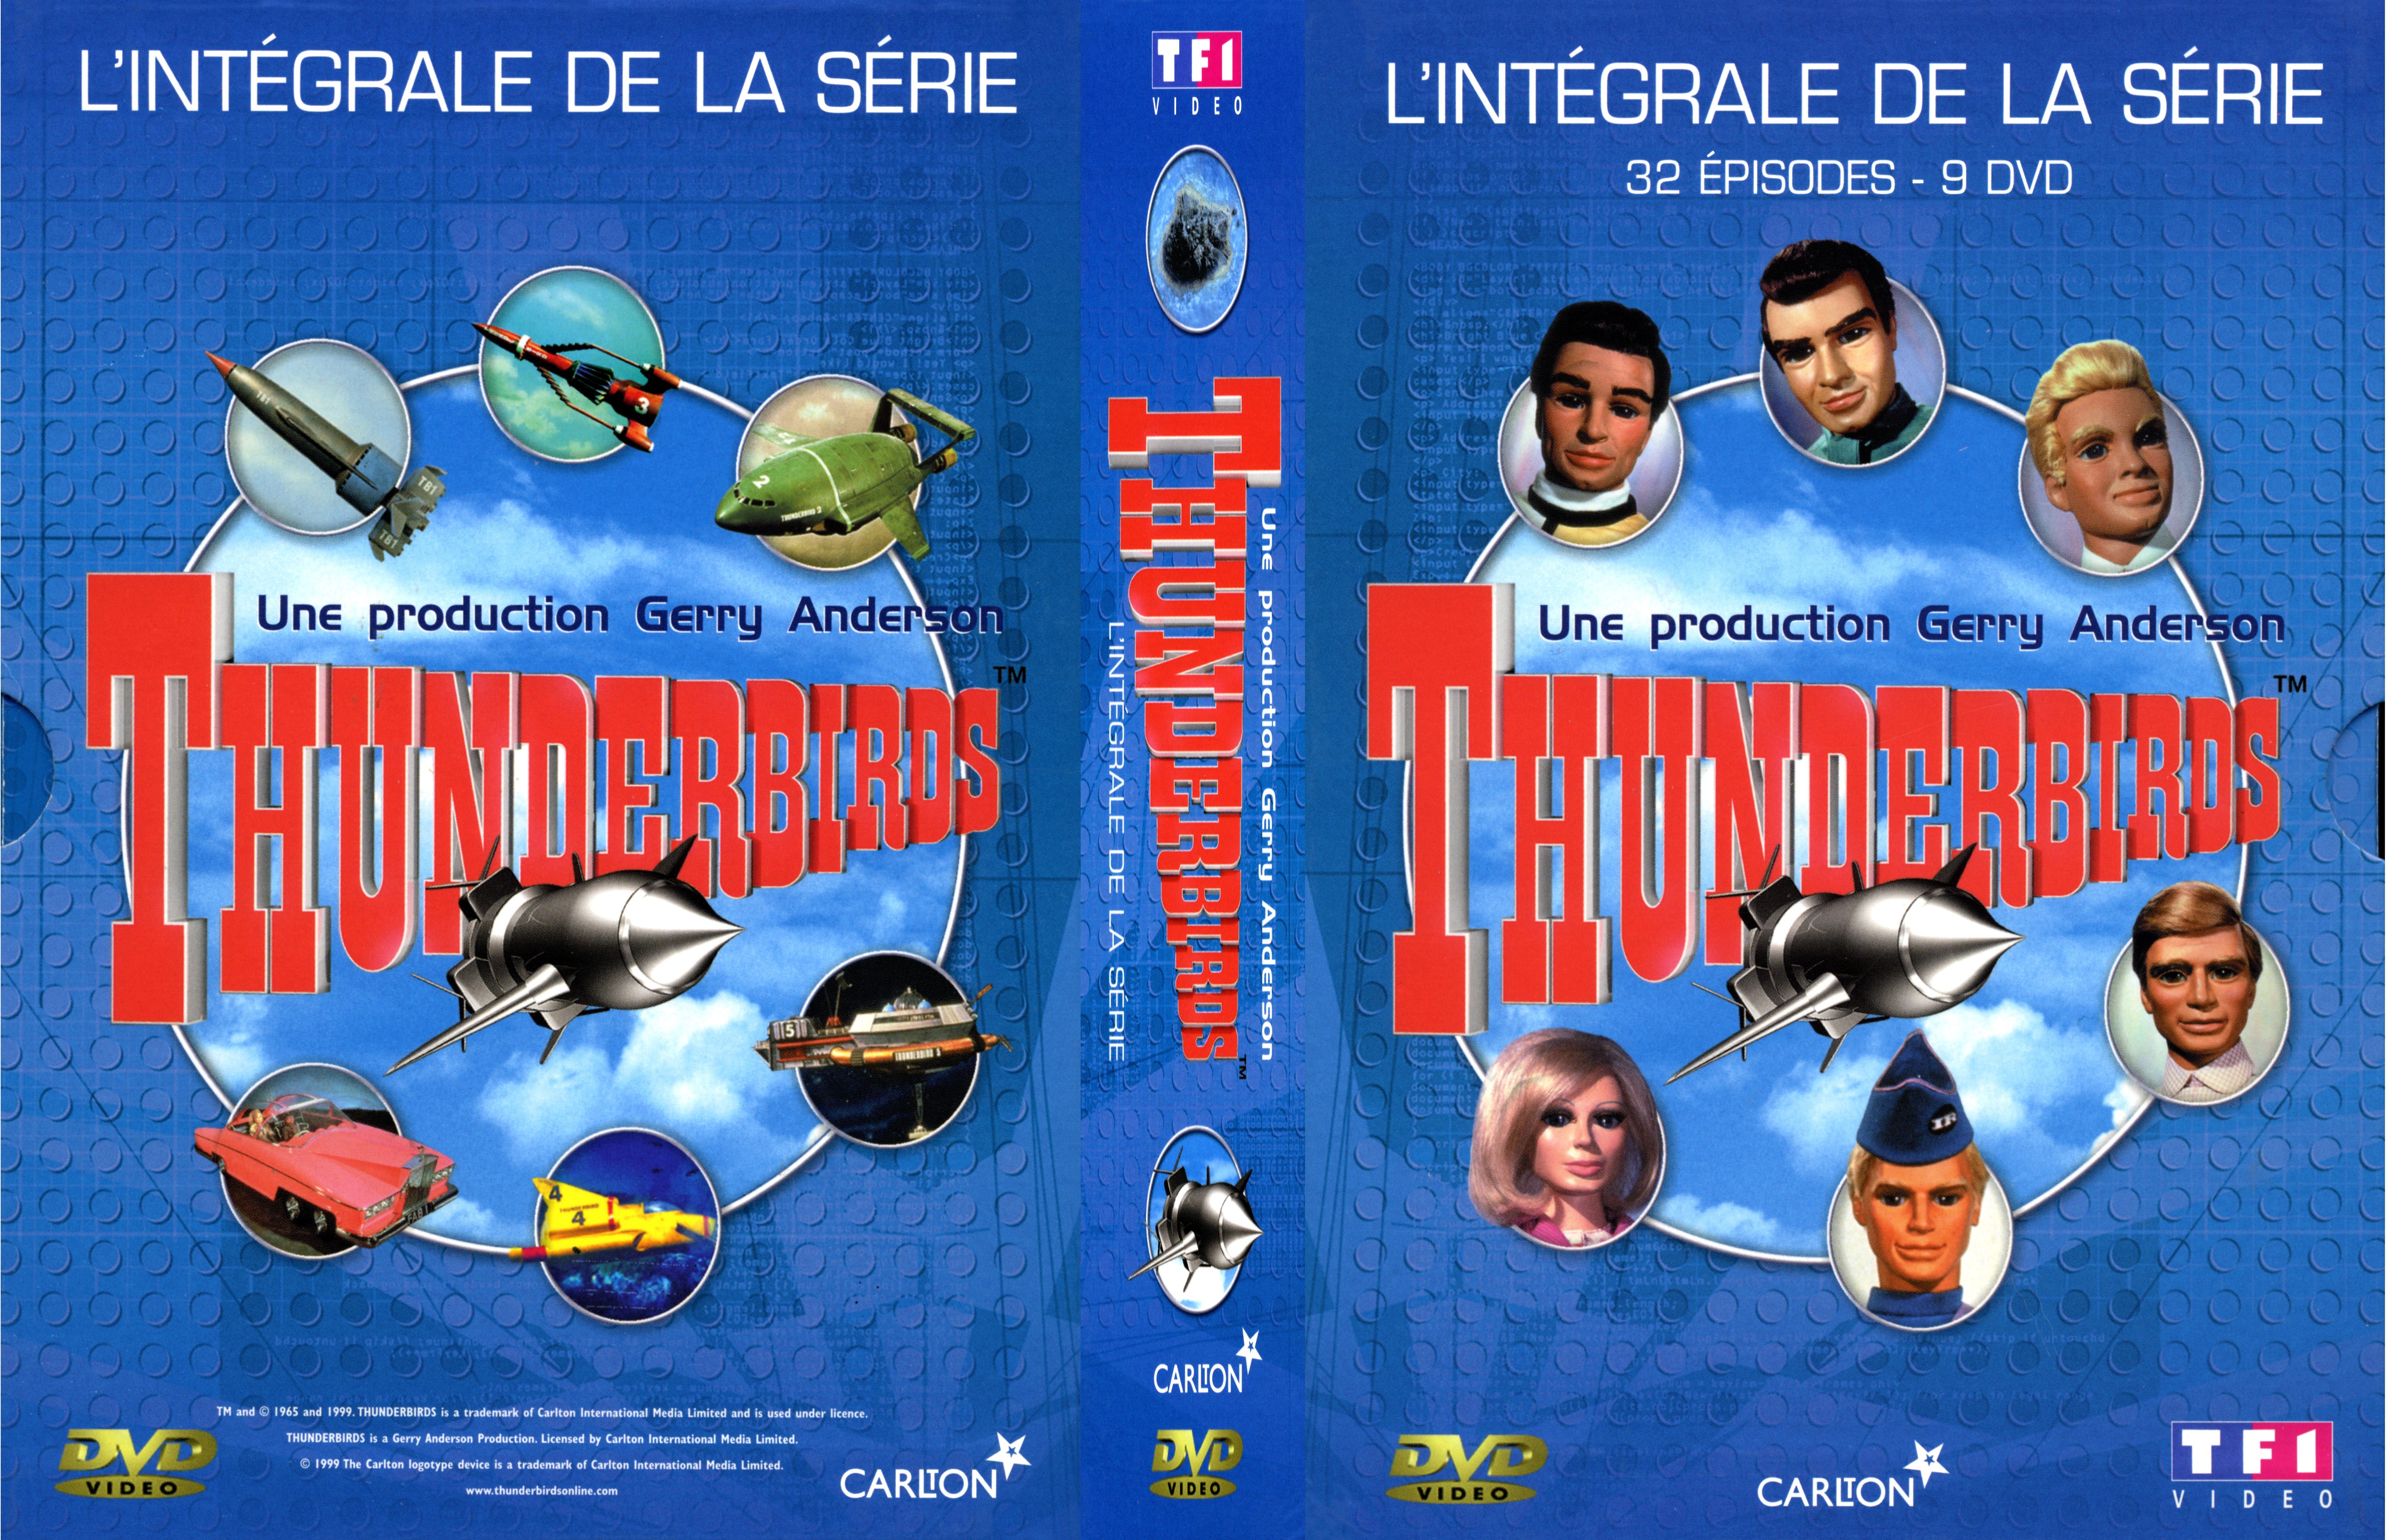 Jaquette DVD Thunderbirds COFFRET